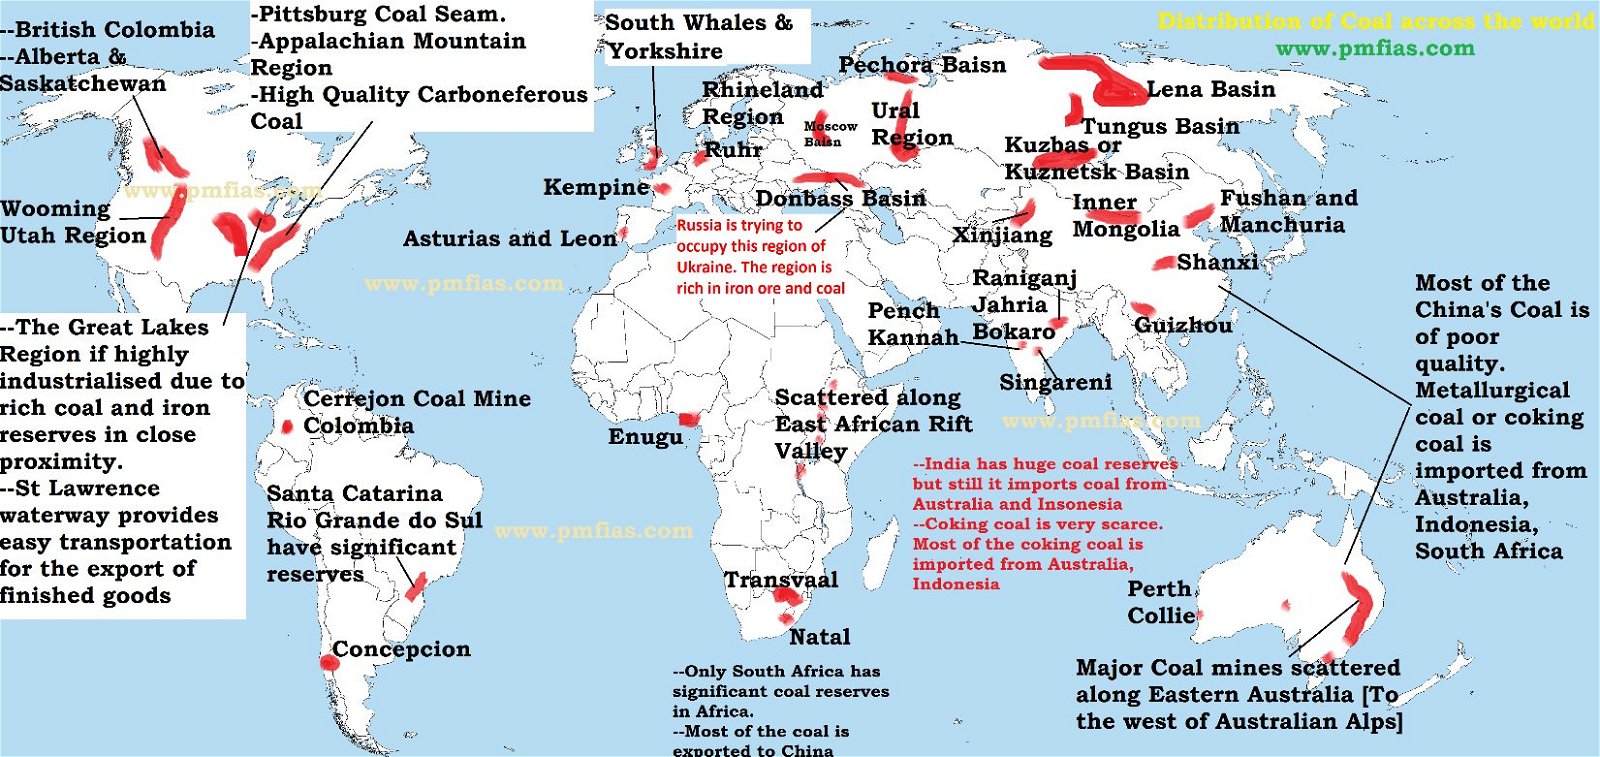 Distribution of Coal across the World